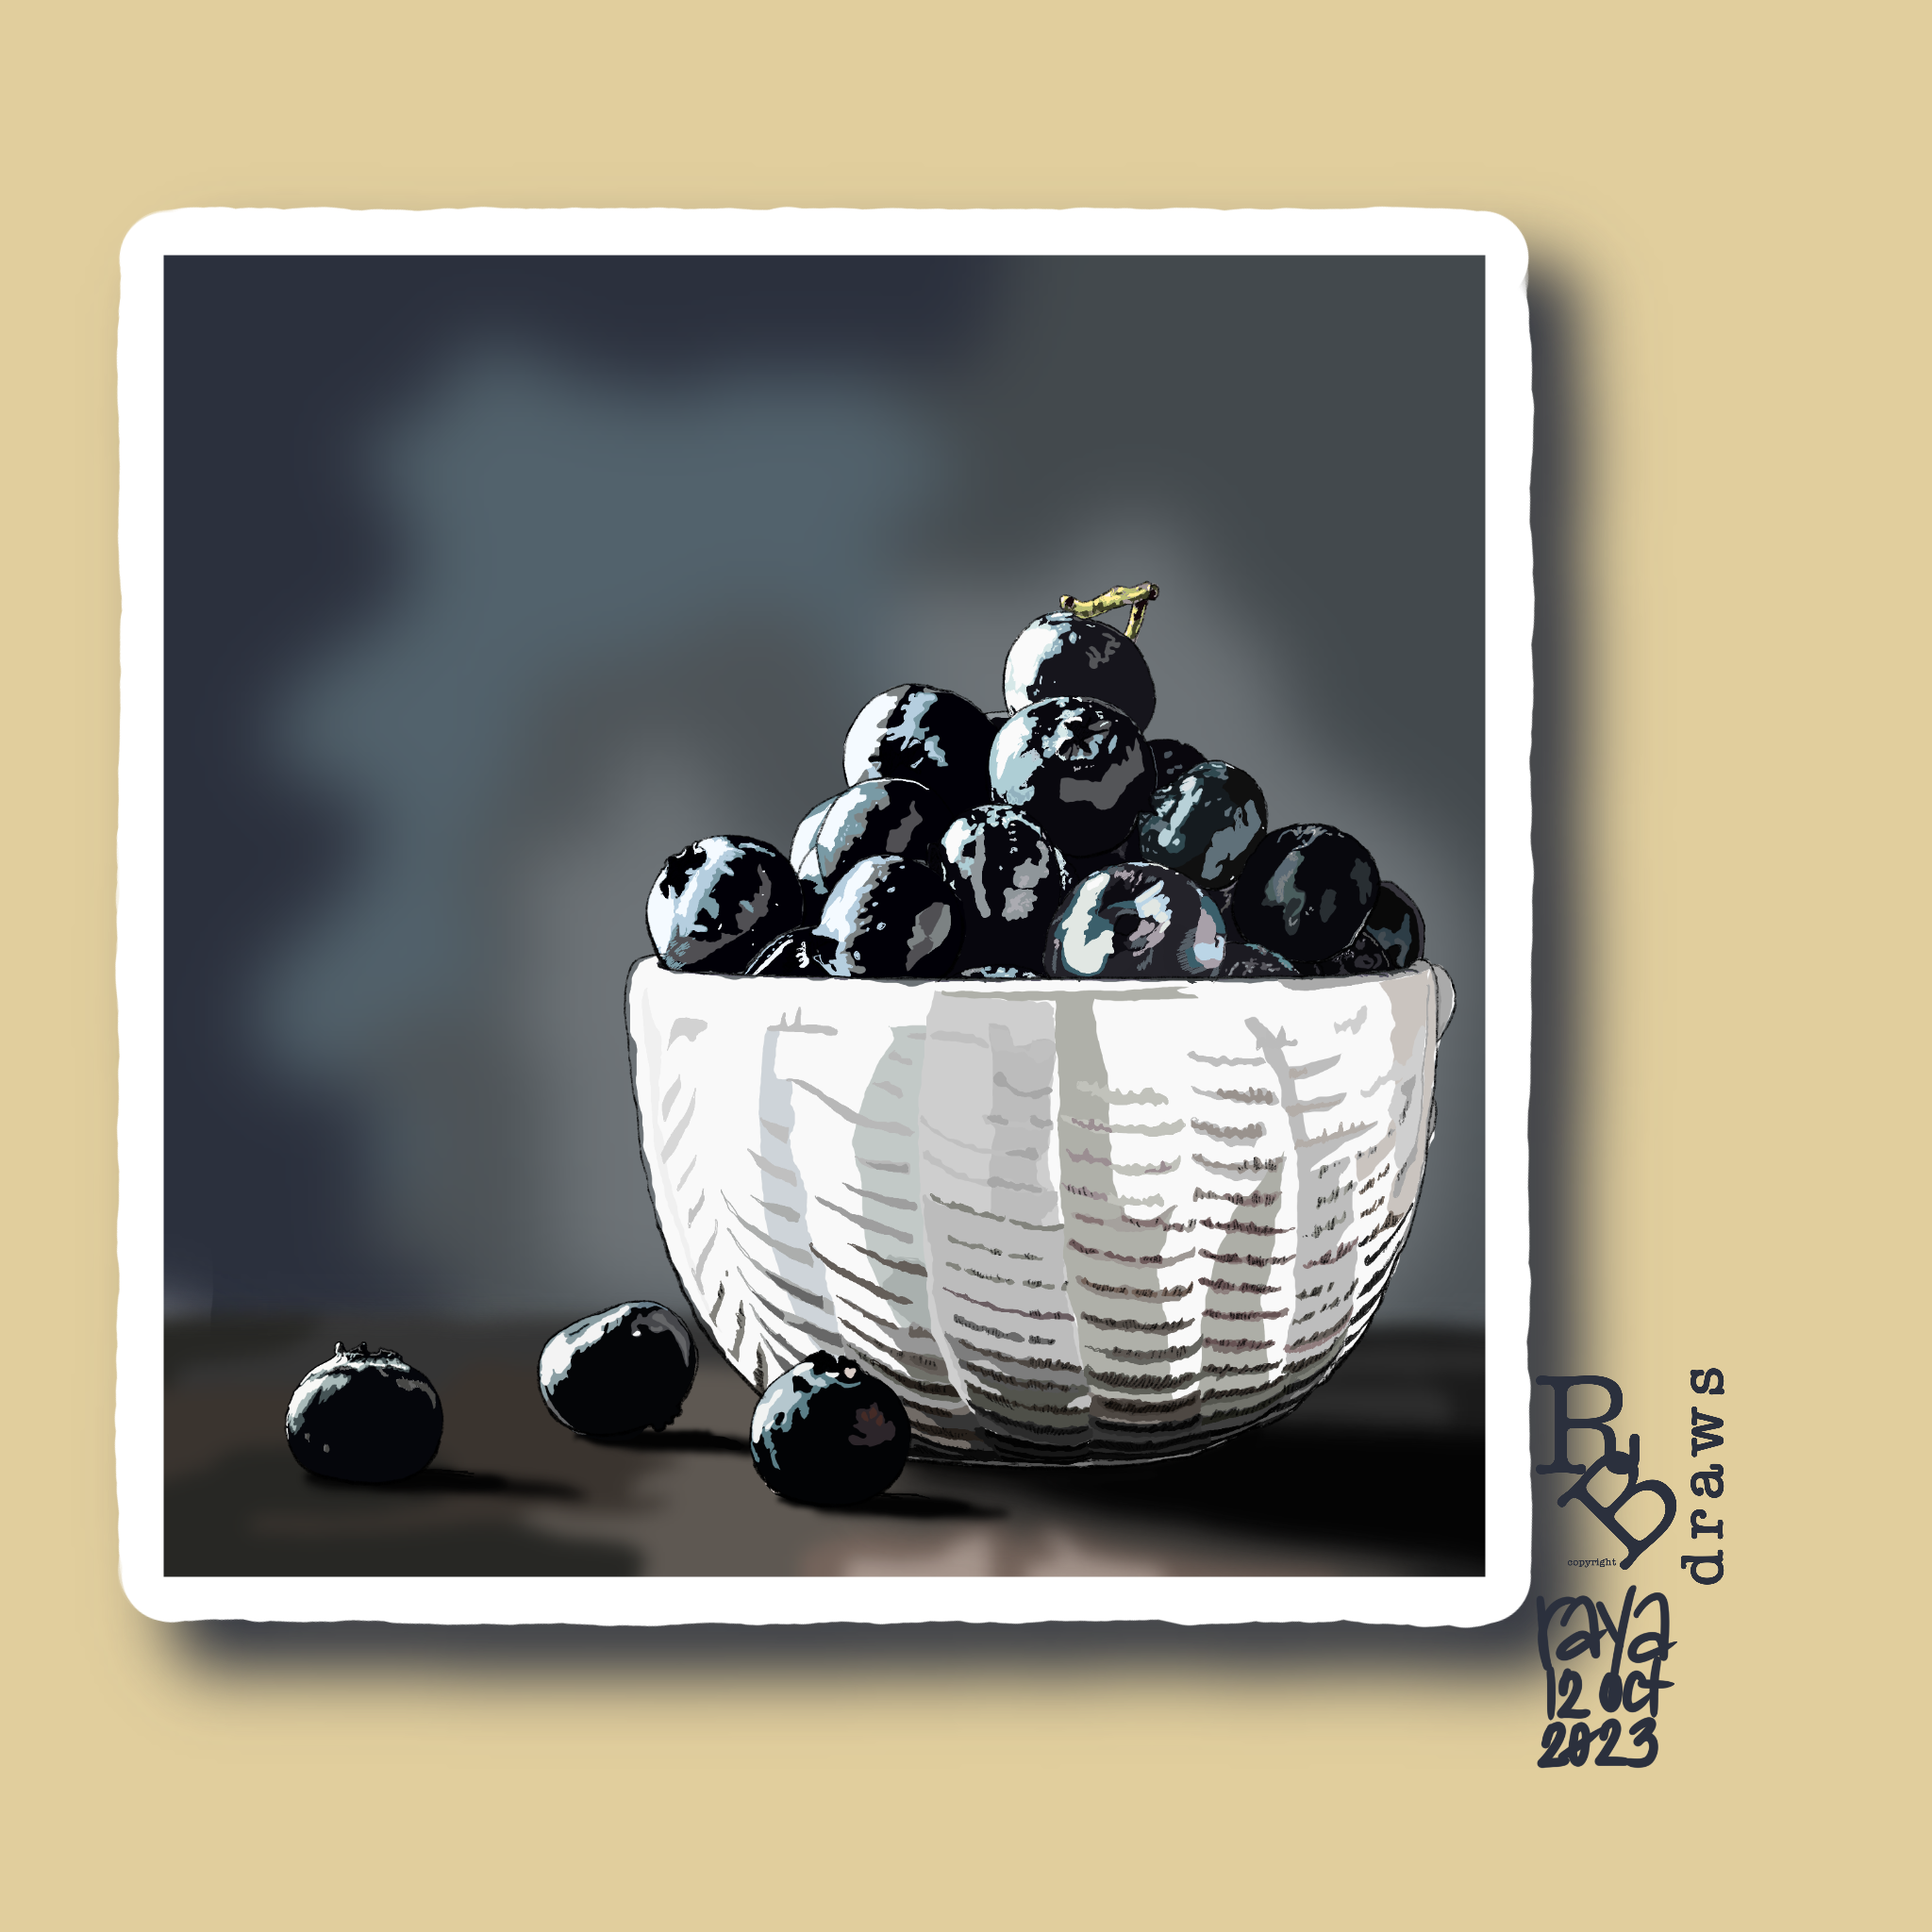 bowl of blueberries